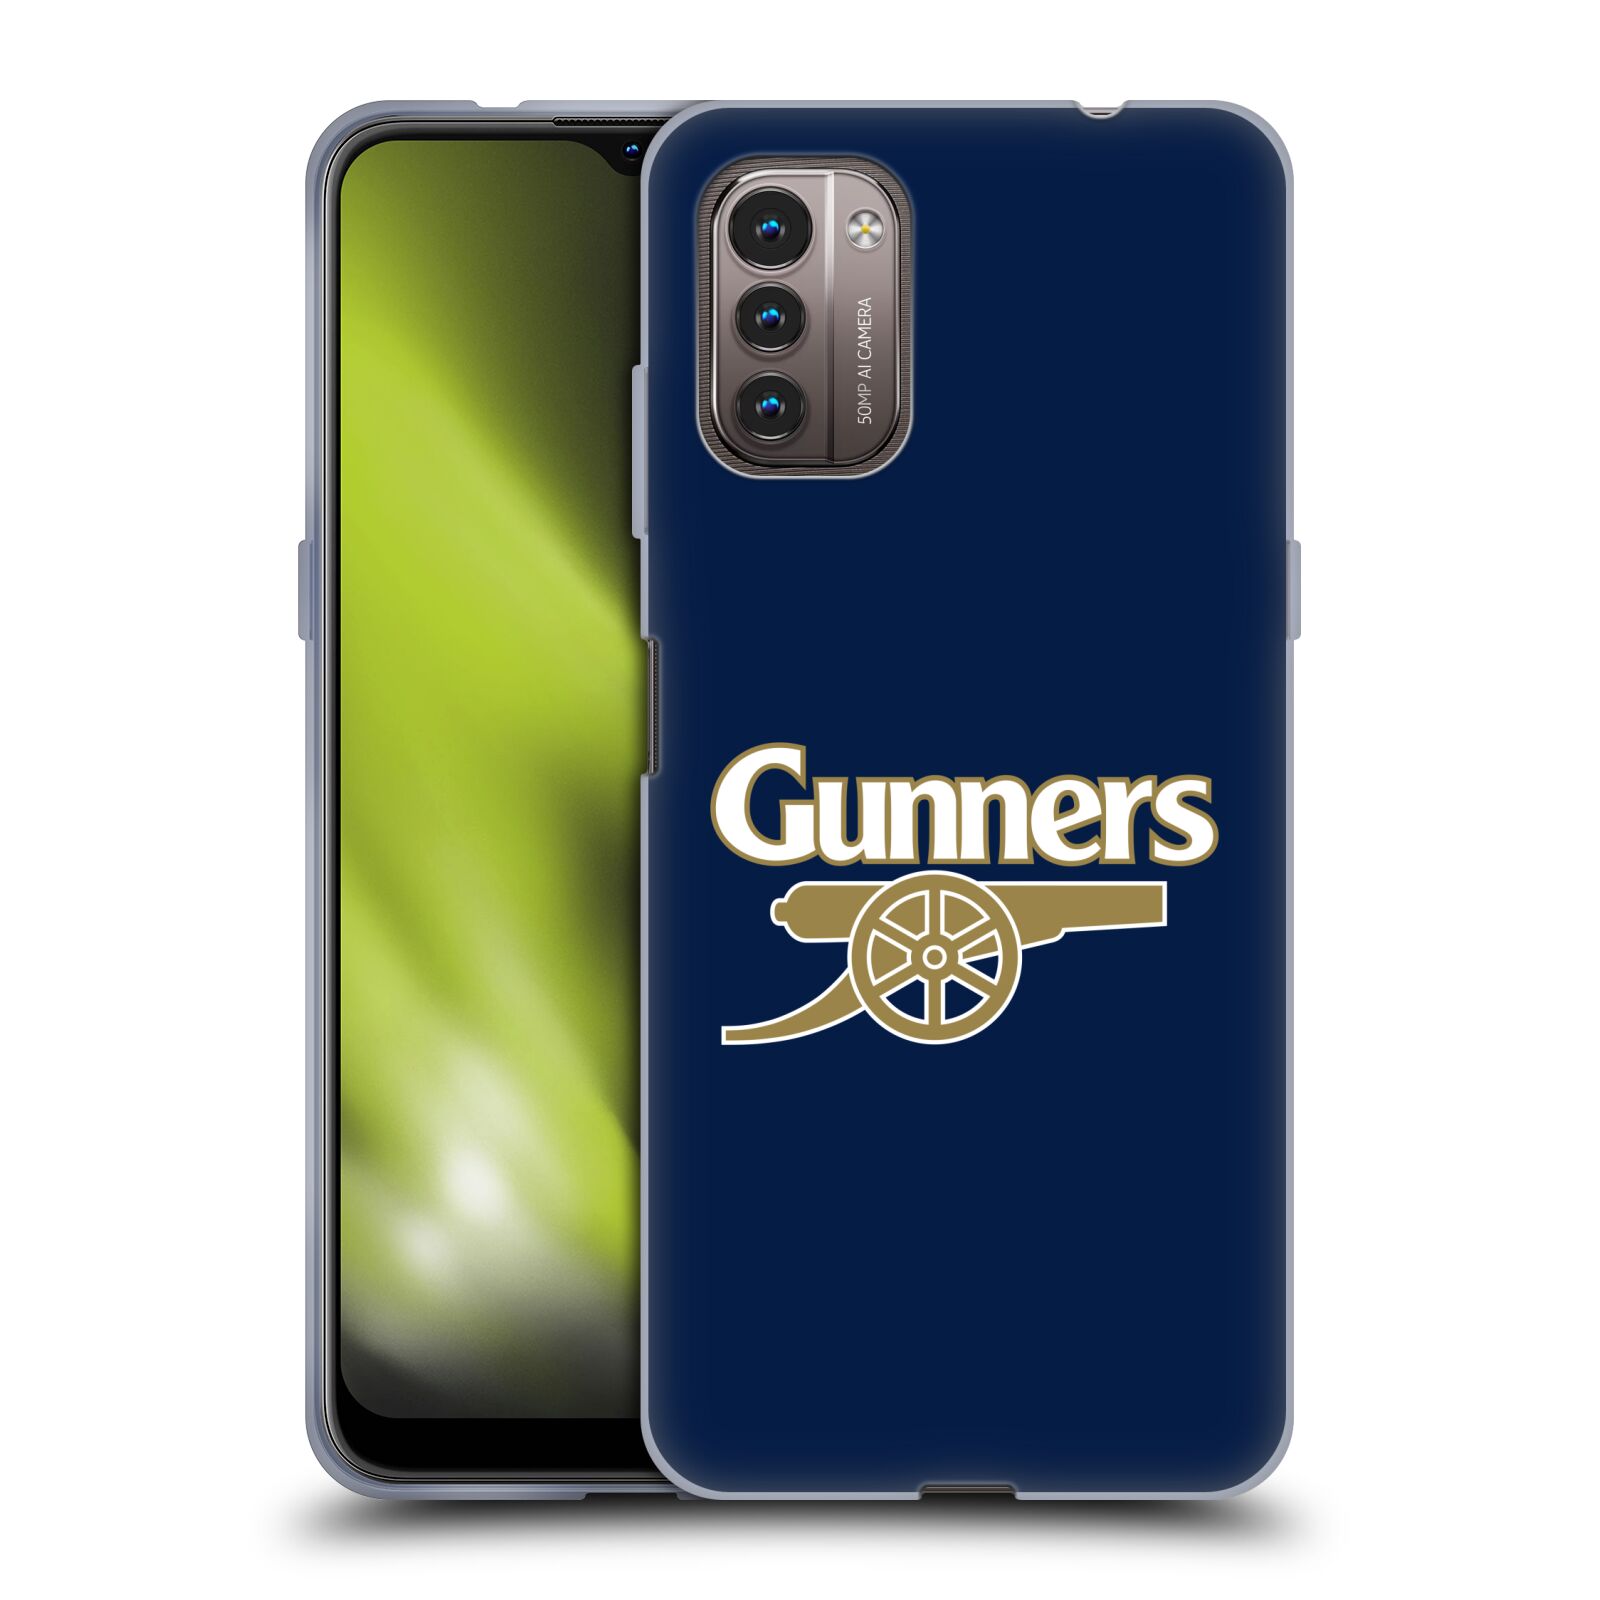 Silikonové pouzdro na mobil Nokia G11 / G21 - Head Case - Arsenal FC - Gunners